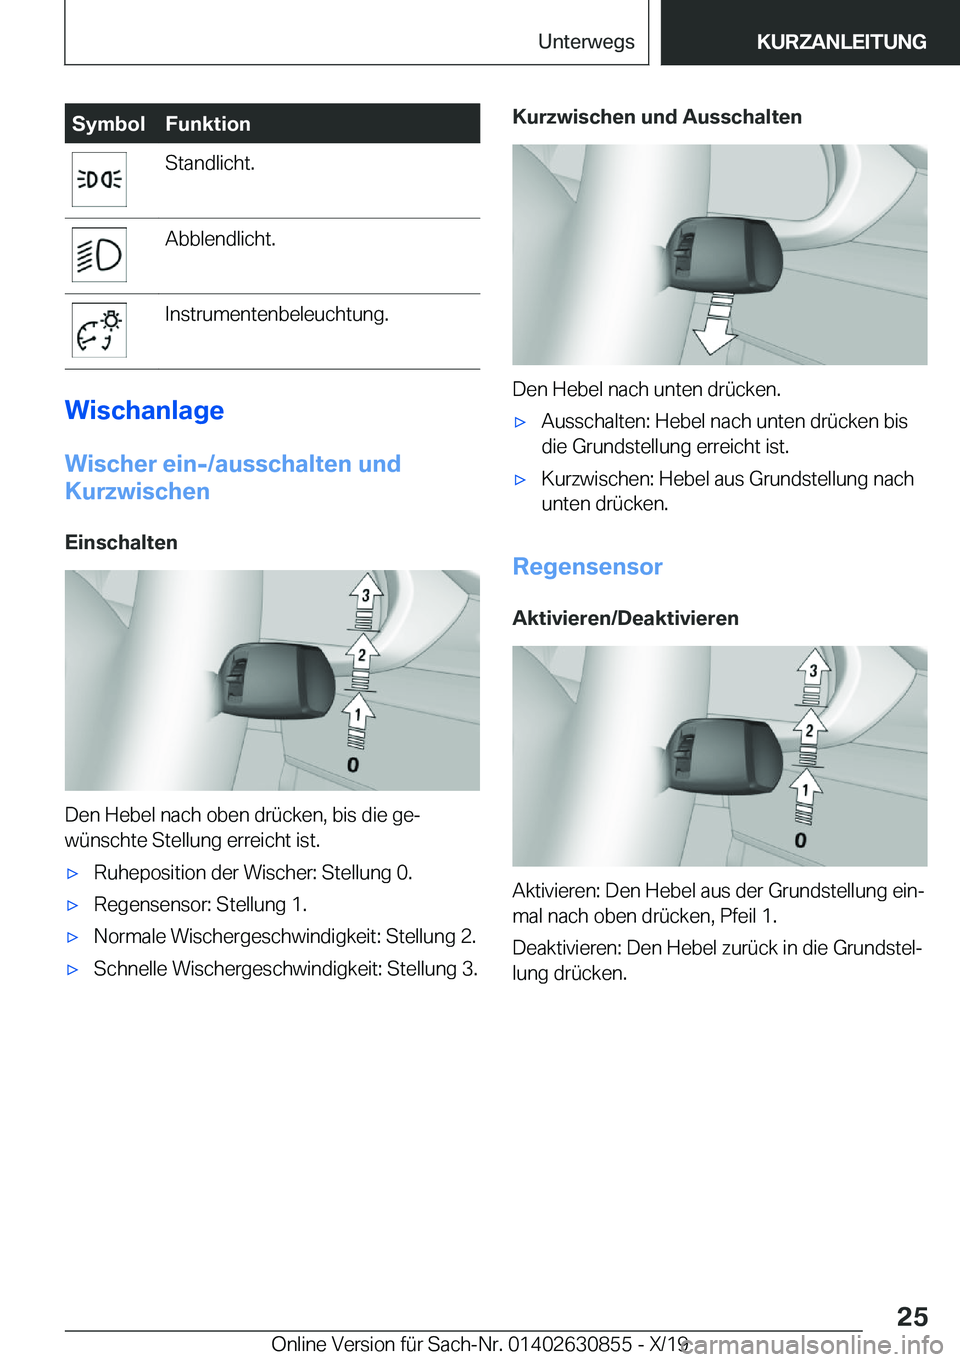 BMW 4 SERIES GRAN COUPE 2020  Betriebsanleitungen (in German) �S�y�m�b�o�l�F�u�n�k�t�i�o�n�S�t�a�n�d�l�i�c�h�t�.�A�b�b�l�e�n�d�l�i�c�h�t�.�I�n�s�t�r�u�m�e�n�t�e�n�b�e�l�e�u�c�h�t�u�n�g�.
�W�i�s�c�h�a�n�l�a�g�e
�W�i�s�c�h�e�r��e�i�n�-�/�a�u�s�s�c�h�a�l�t�e�n��u